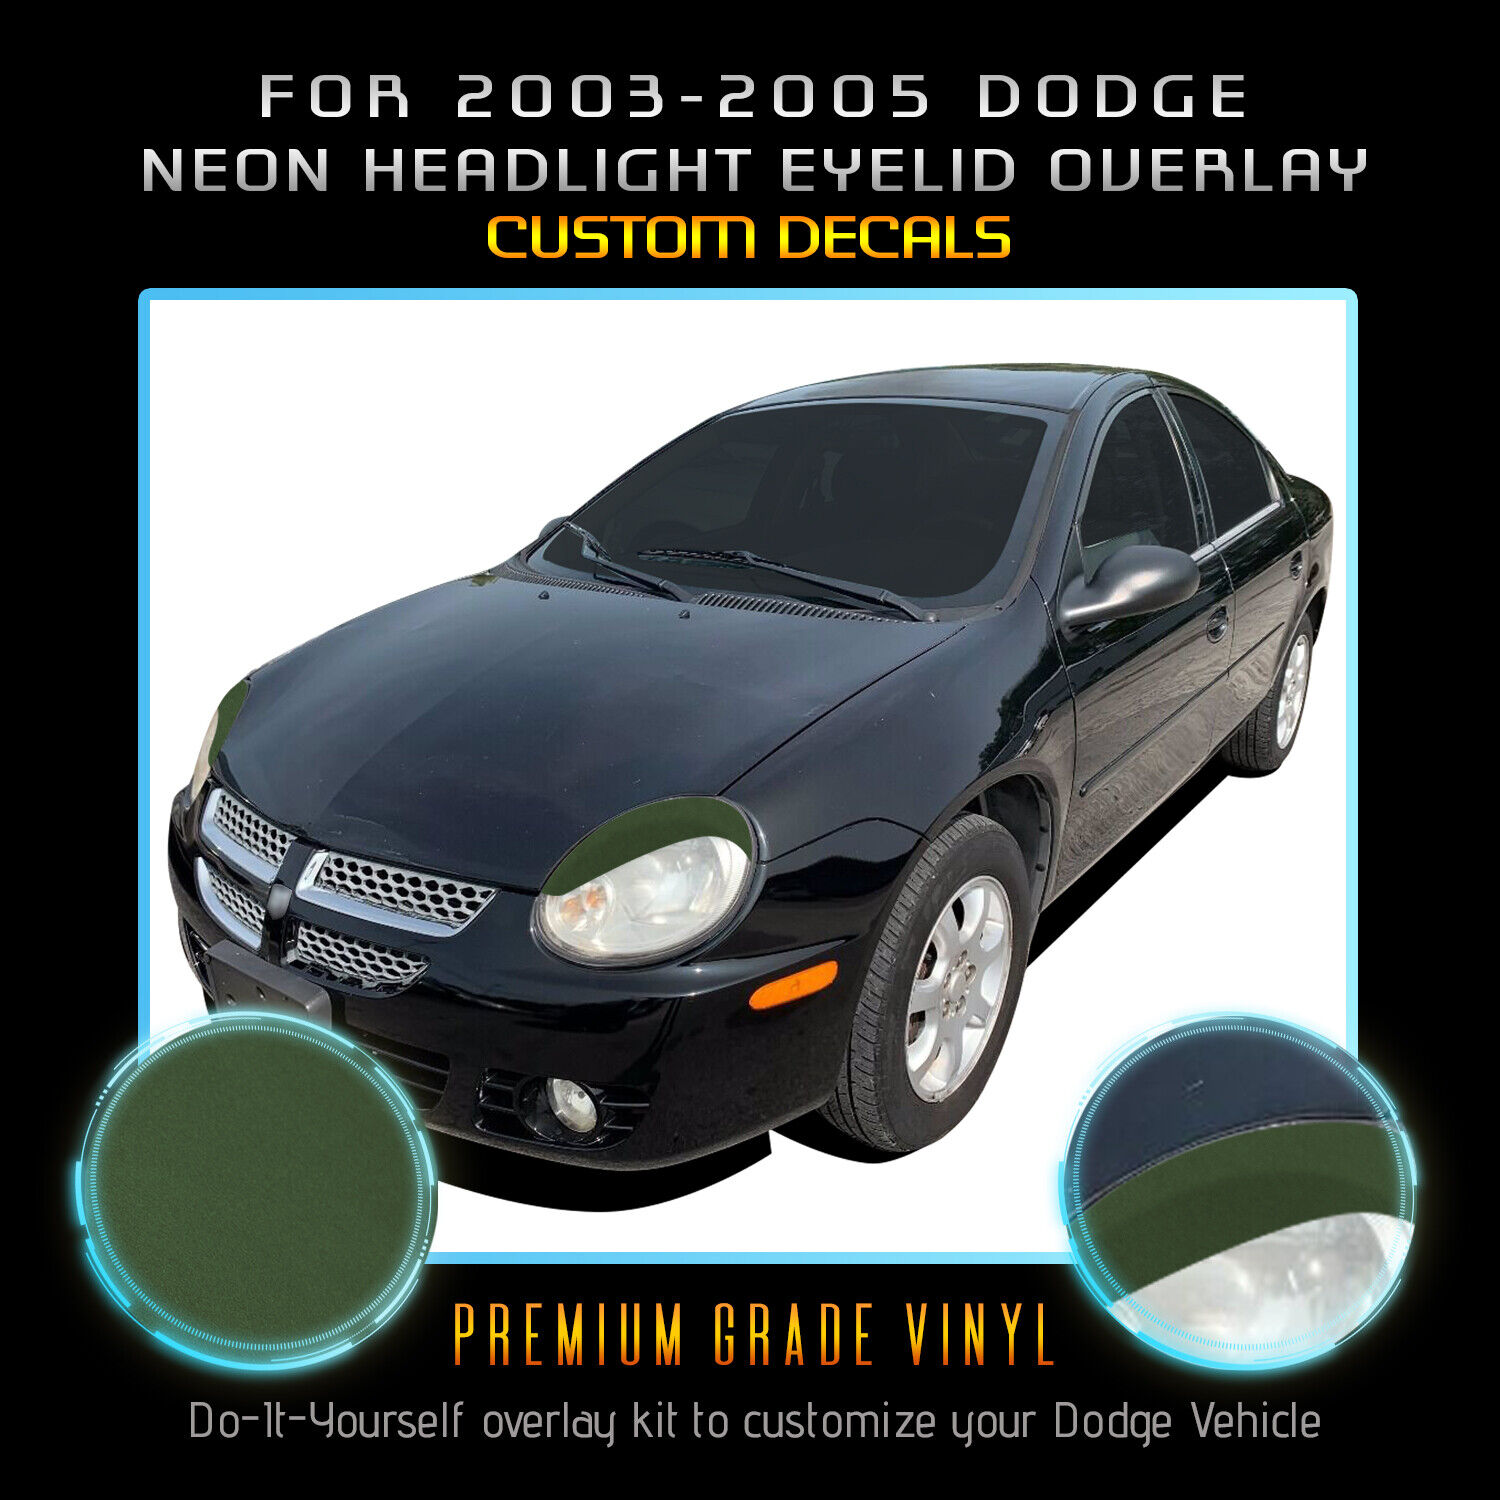 For 2003-2005 Dodge Neon SRT-4 SXT R/T Headlight Eyelid Decal - Flat Matte Vinyl